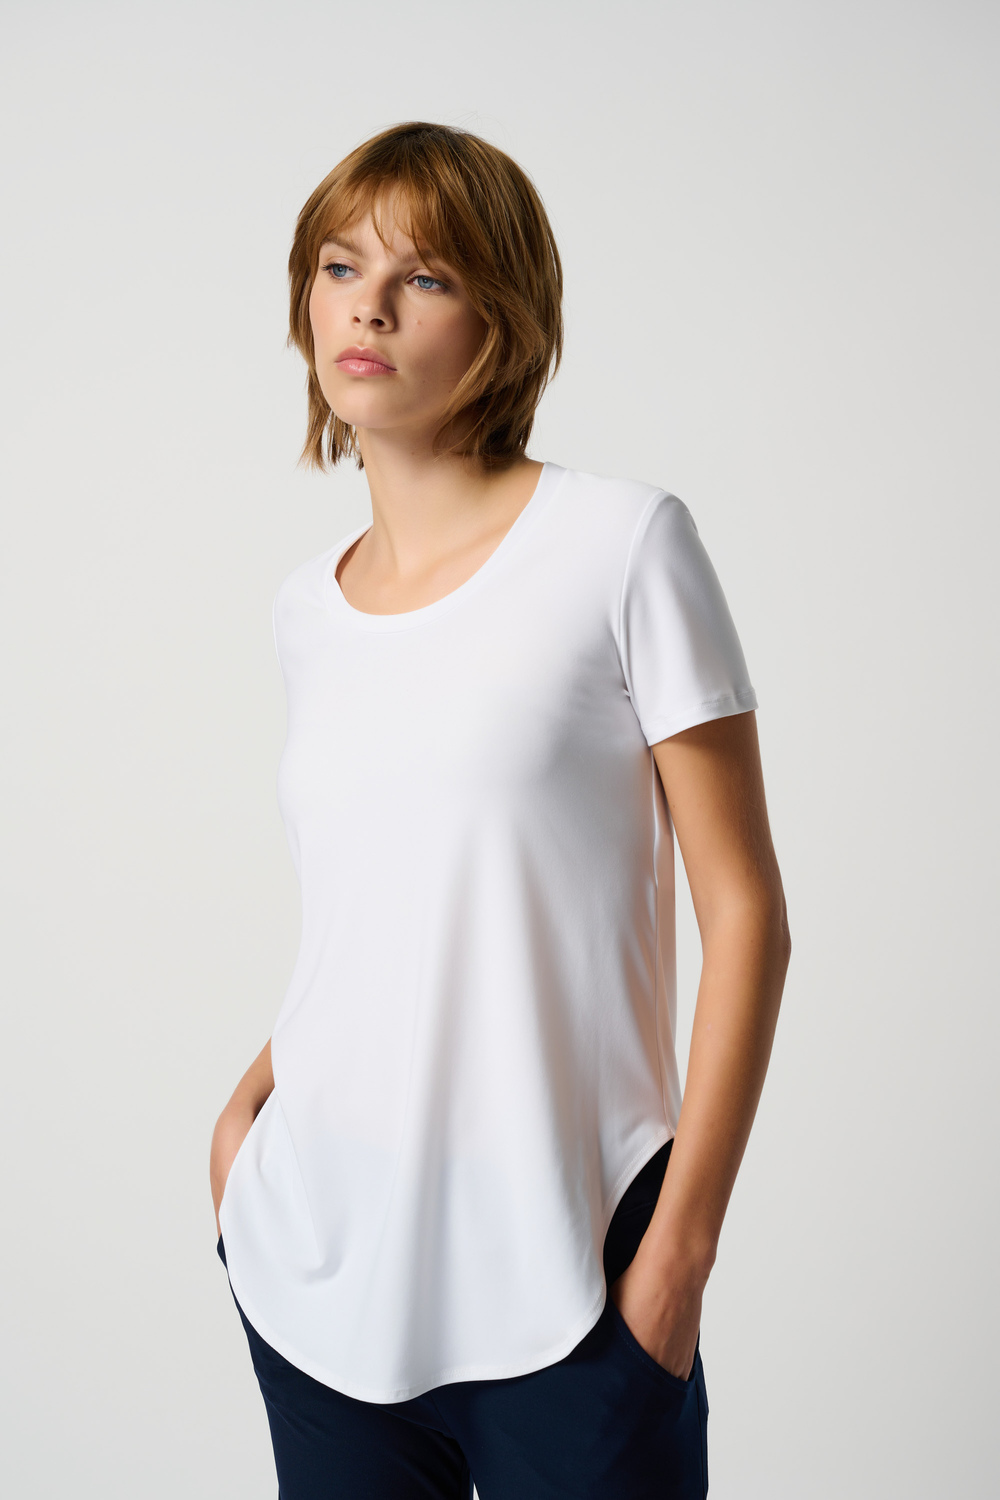 Longline T-Shirt Style 183220. Vanilla 30